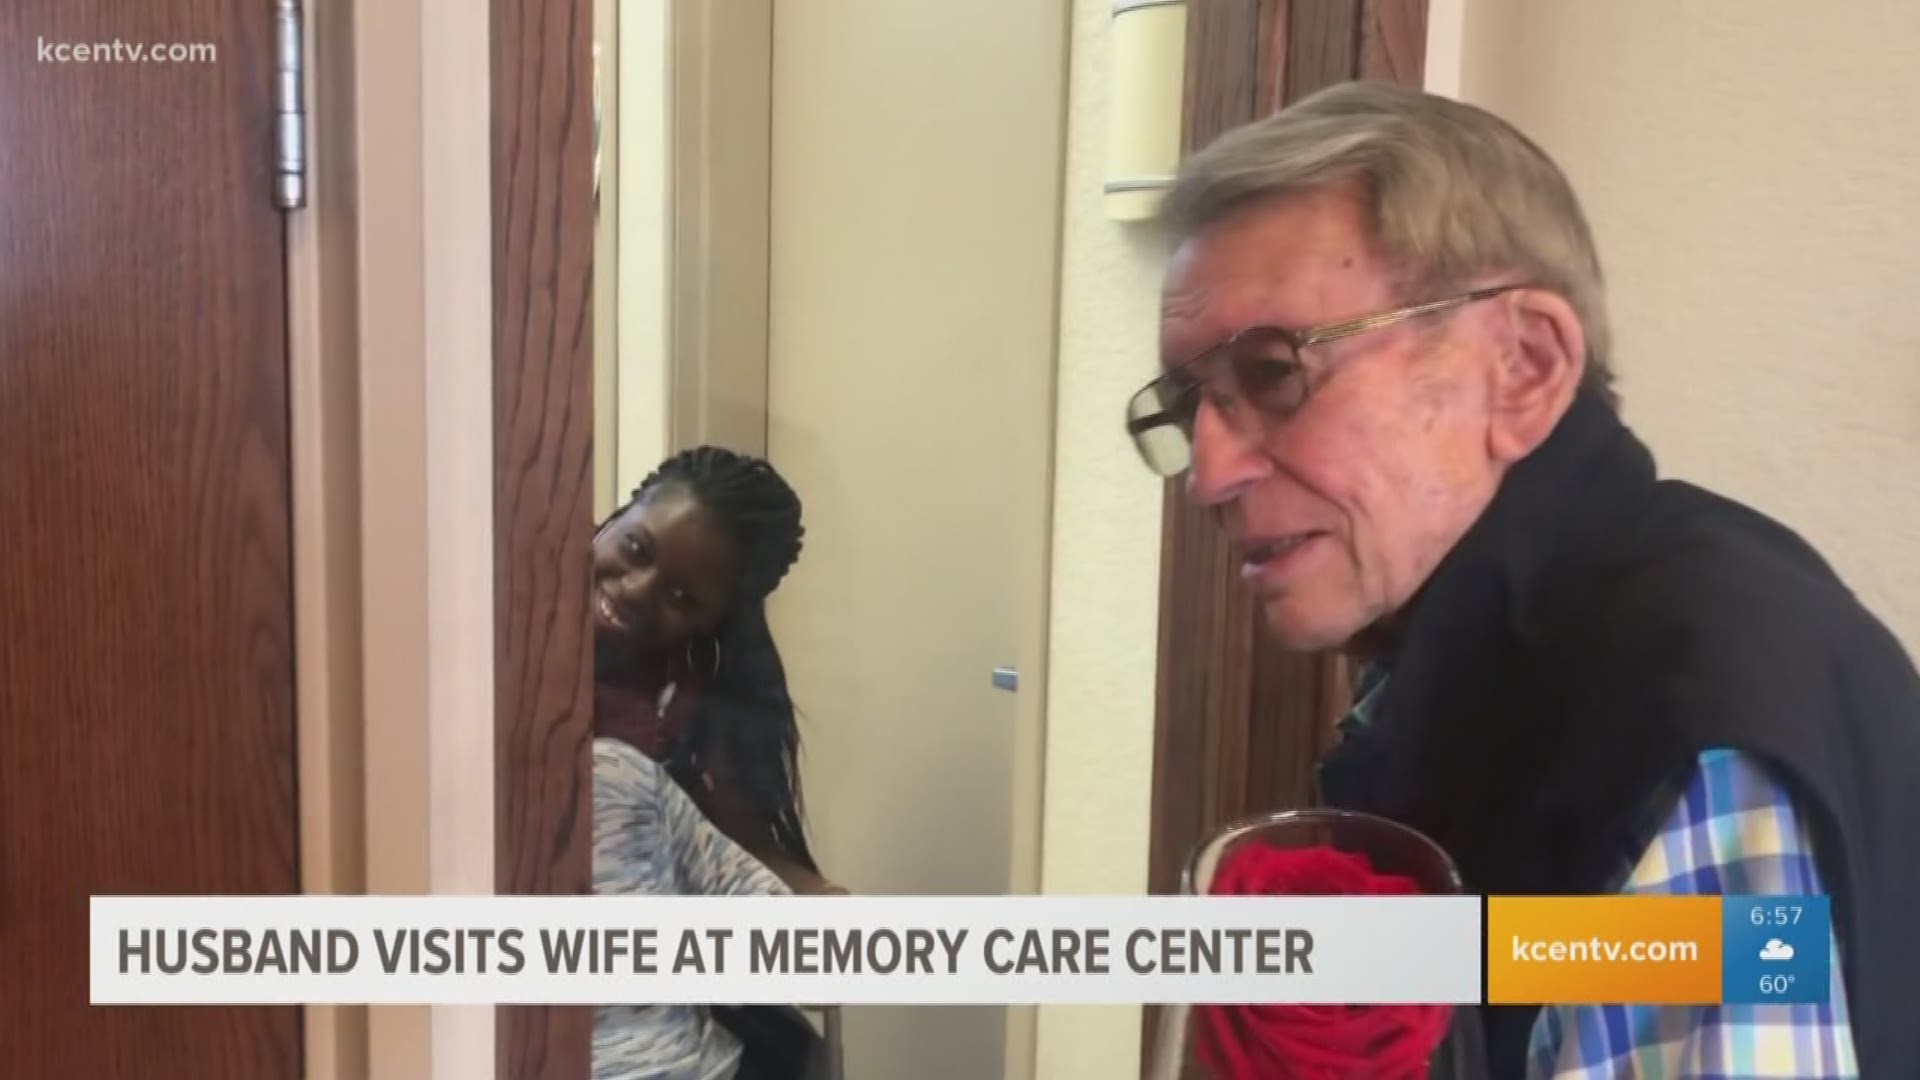 Bob Kennedy visits his wife, Bettye, three times a week at Luvida Memory Care Center.